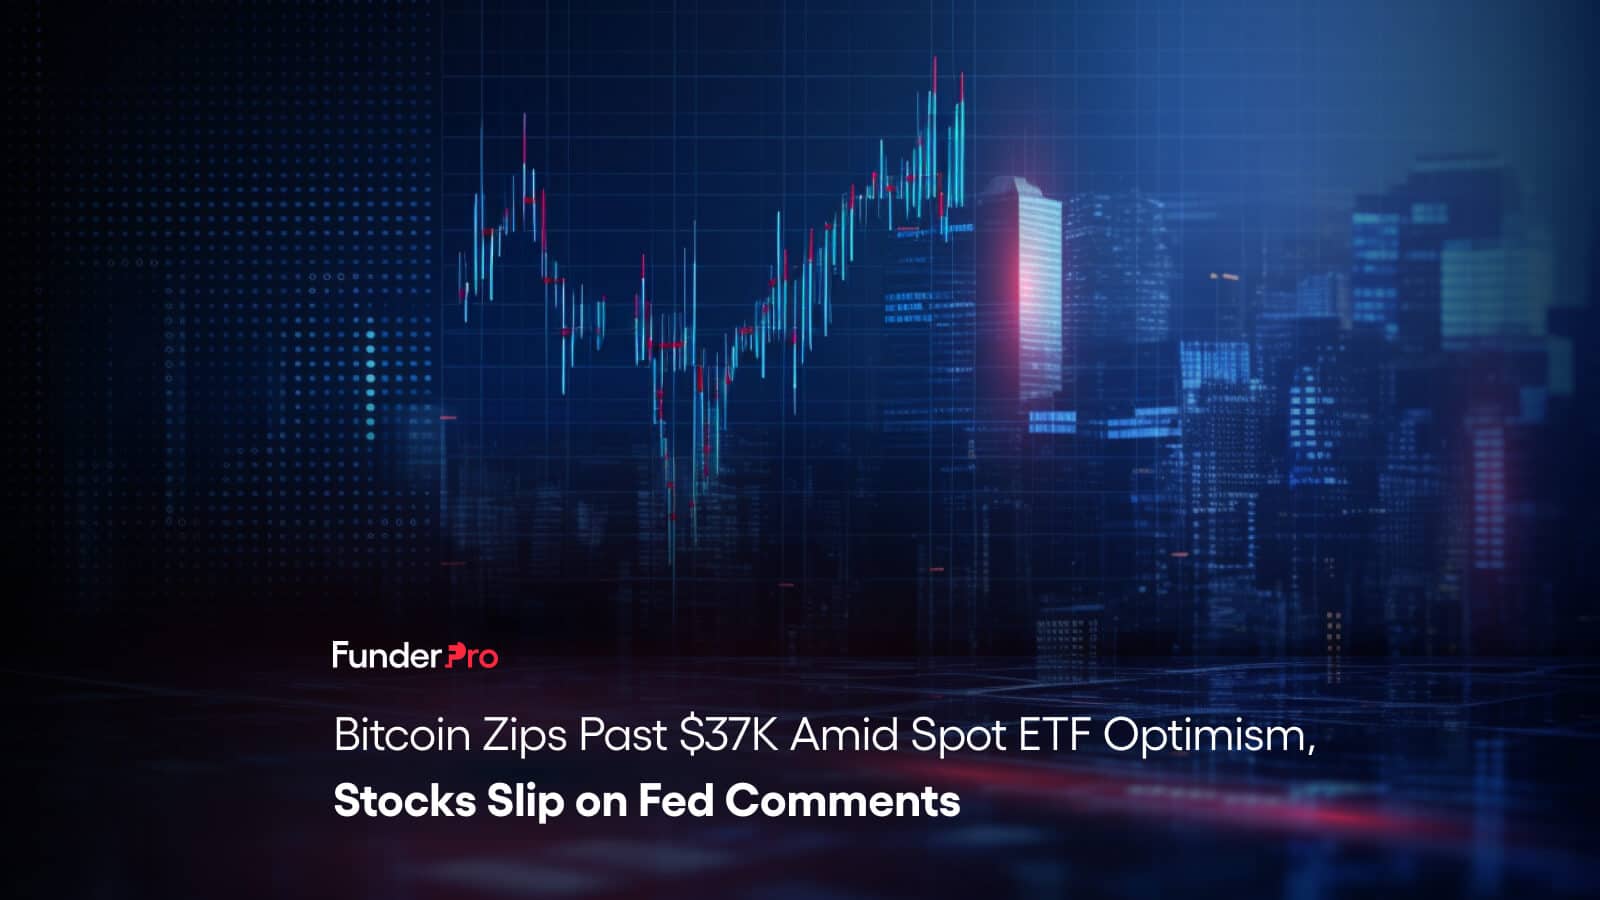 Bitcoin Zips Past $37K Amid Spot ETF Optimism, Stocks Slip on Fed Comments